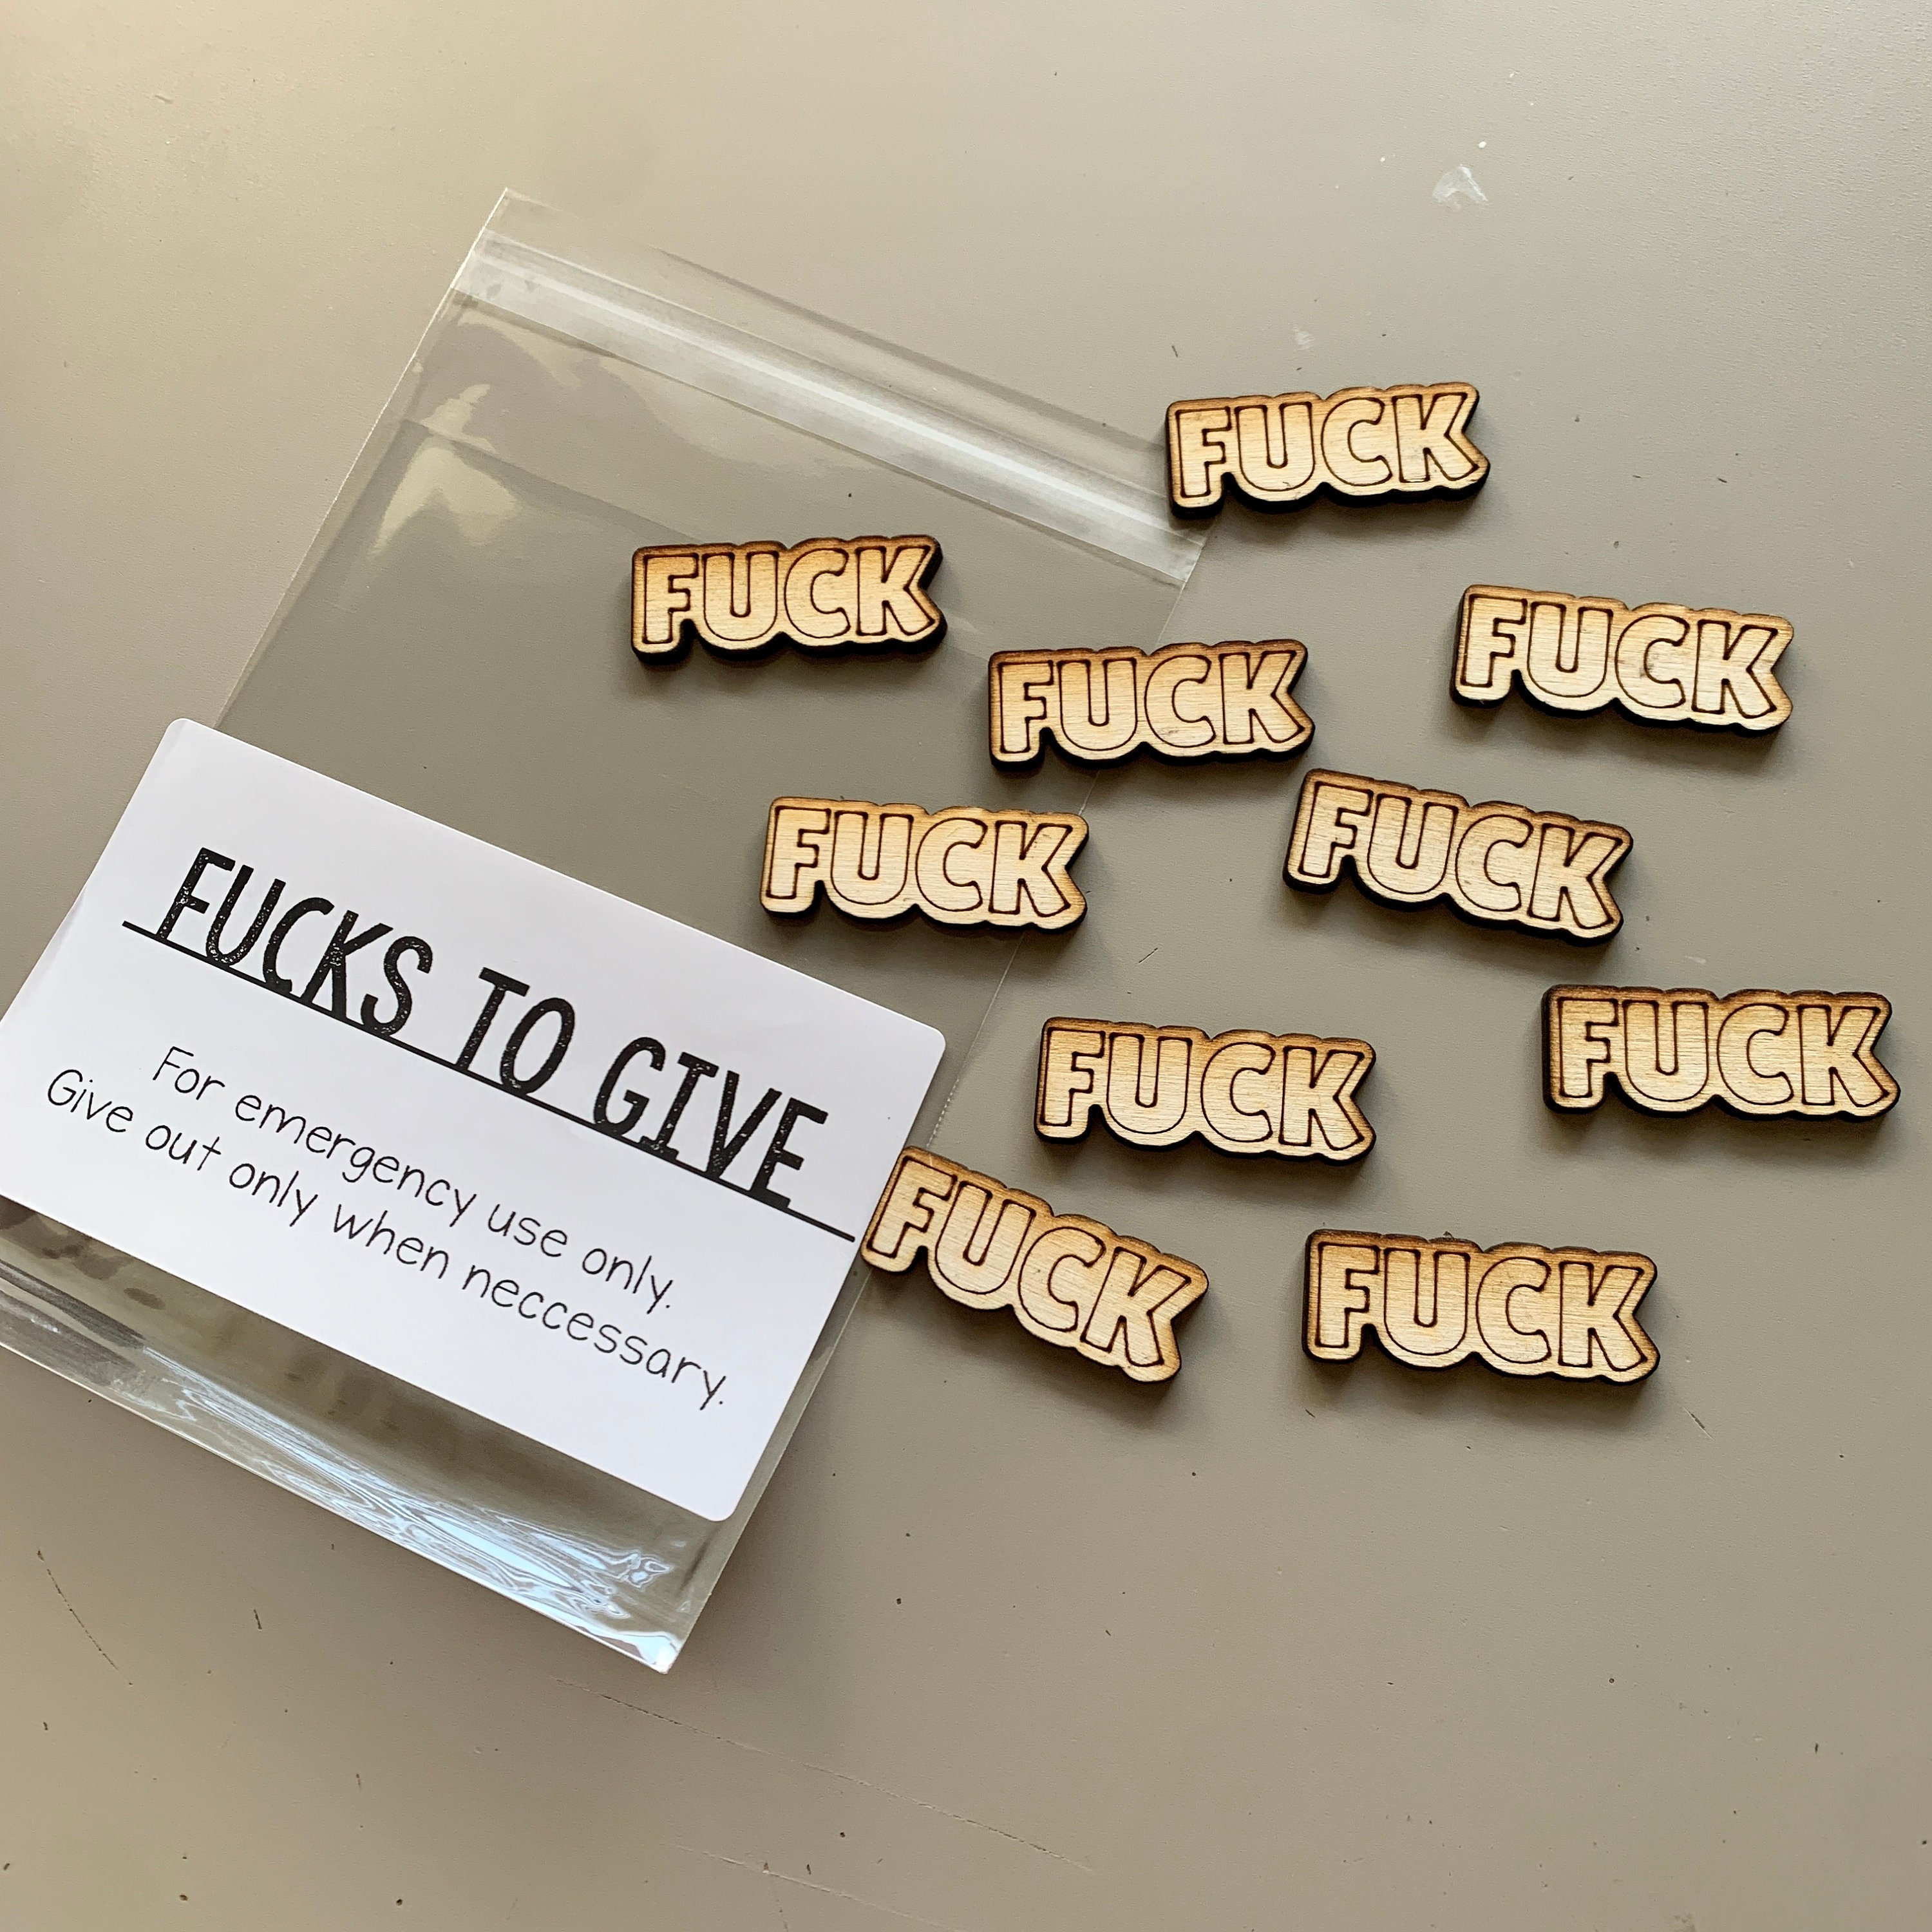 Bag of Fucks fucks to Give My Last Fuck When You Run Out of Fucks to Give  Give a Fuck Don't Give a Fuck Big or Small Bag of Fucks 